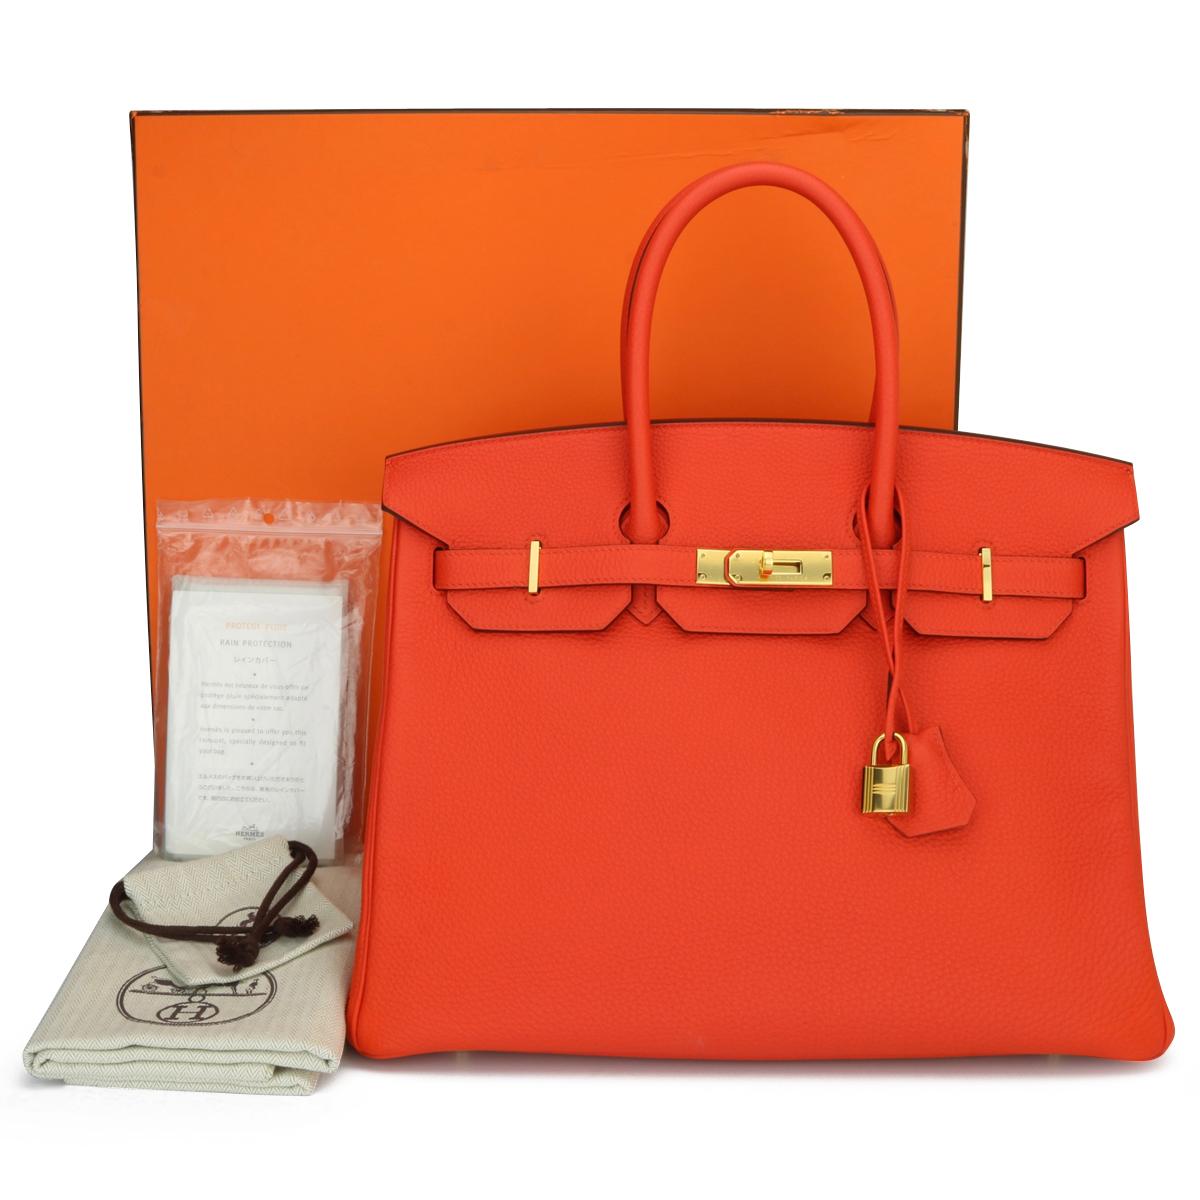 Hermès Birkin Bag 35cm Special Order HSS Bag Capucine Togo Leather w/GHW 2015 10